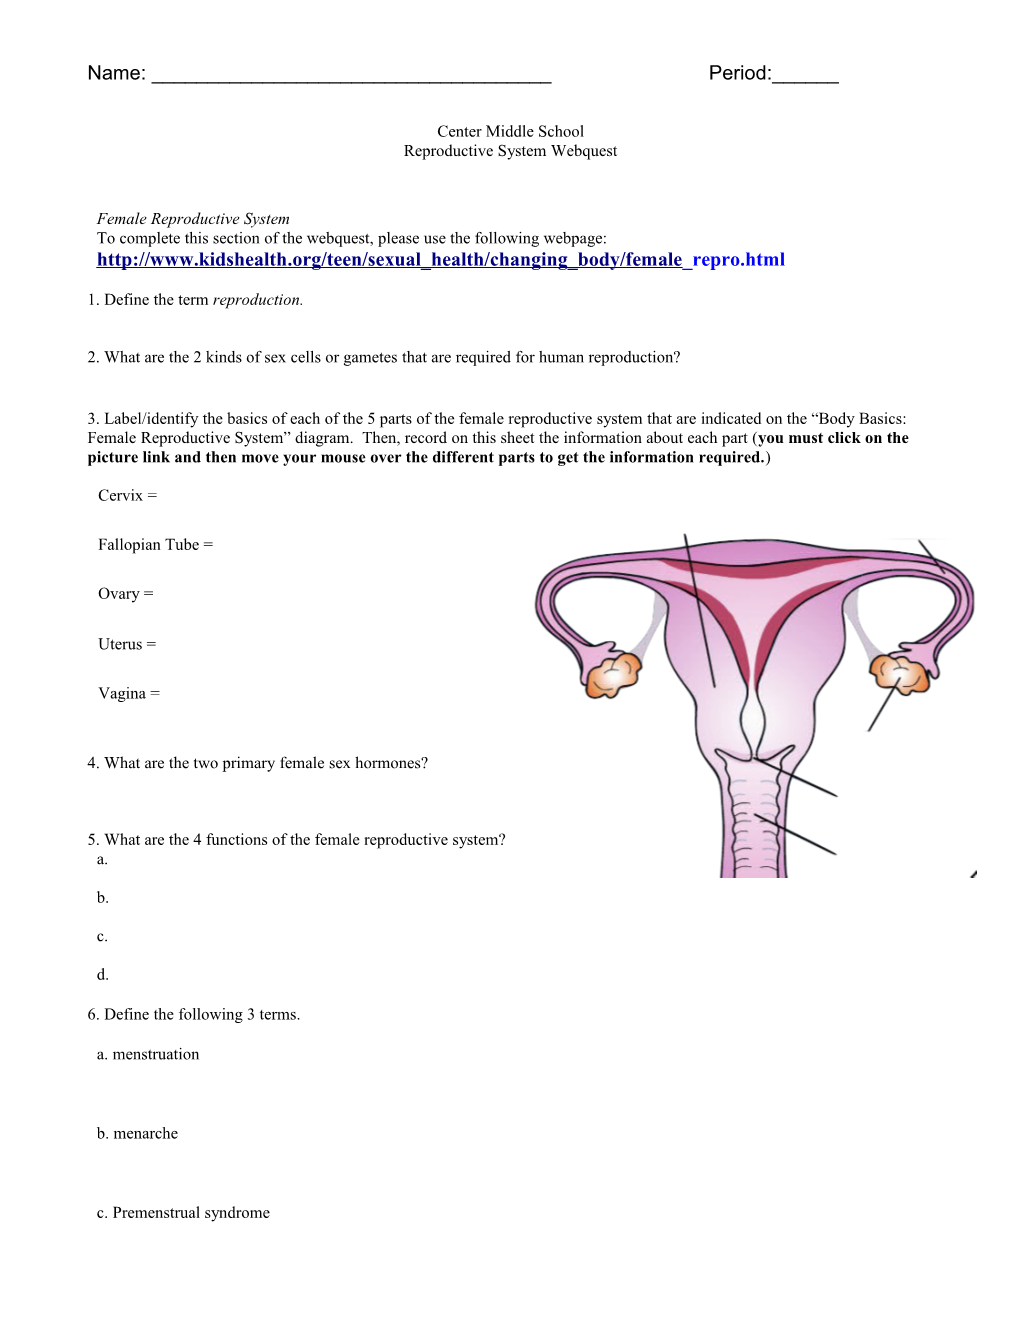 Center Middle School Reproductive System Webquest